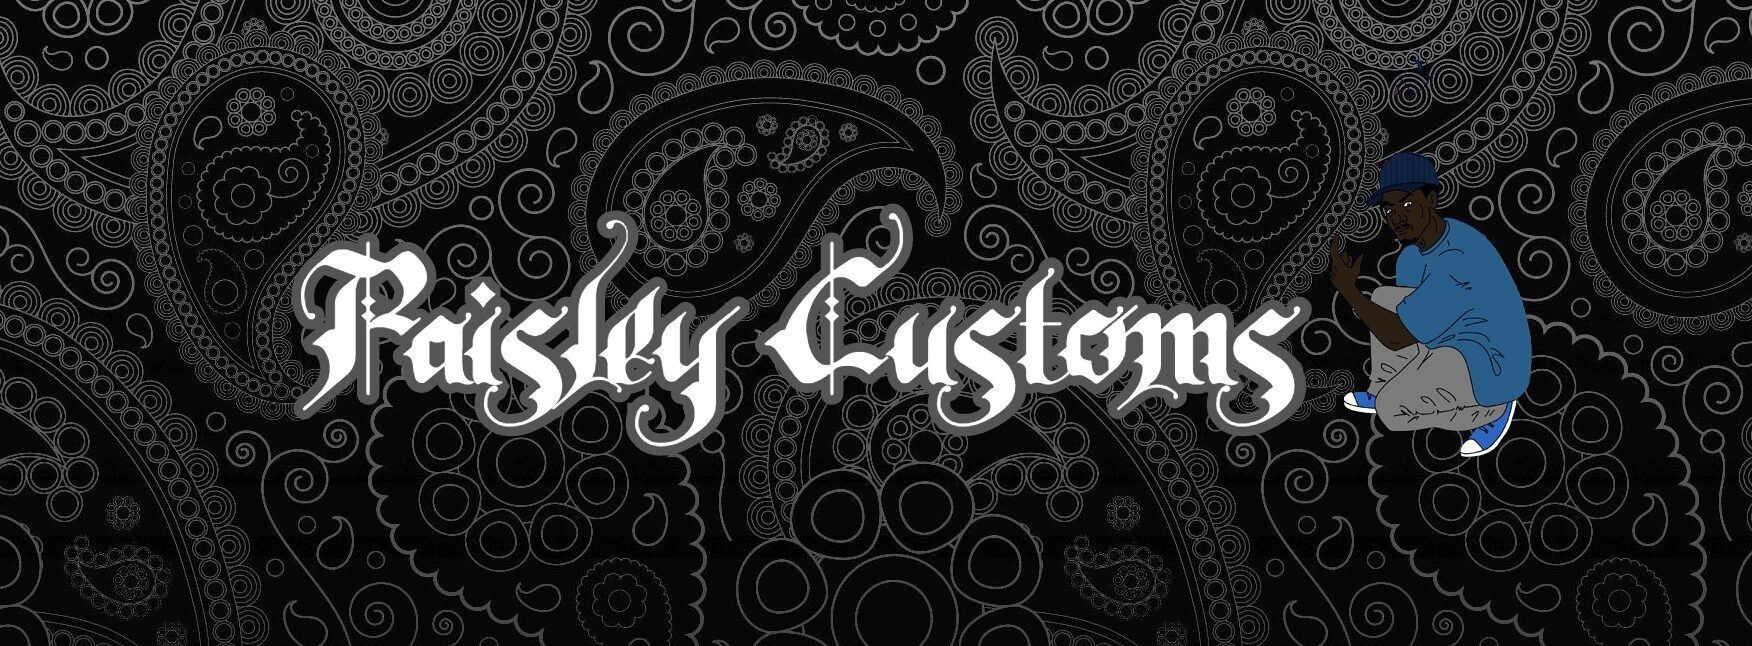 Paisley Customs